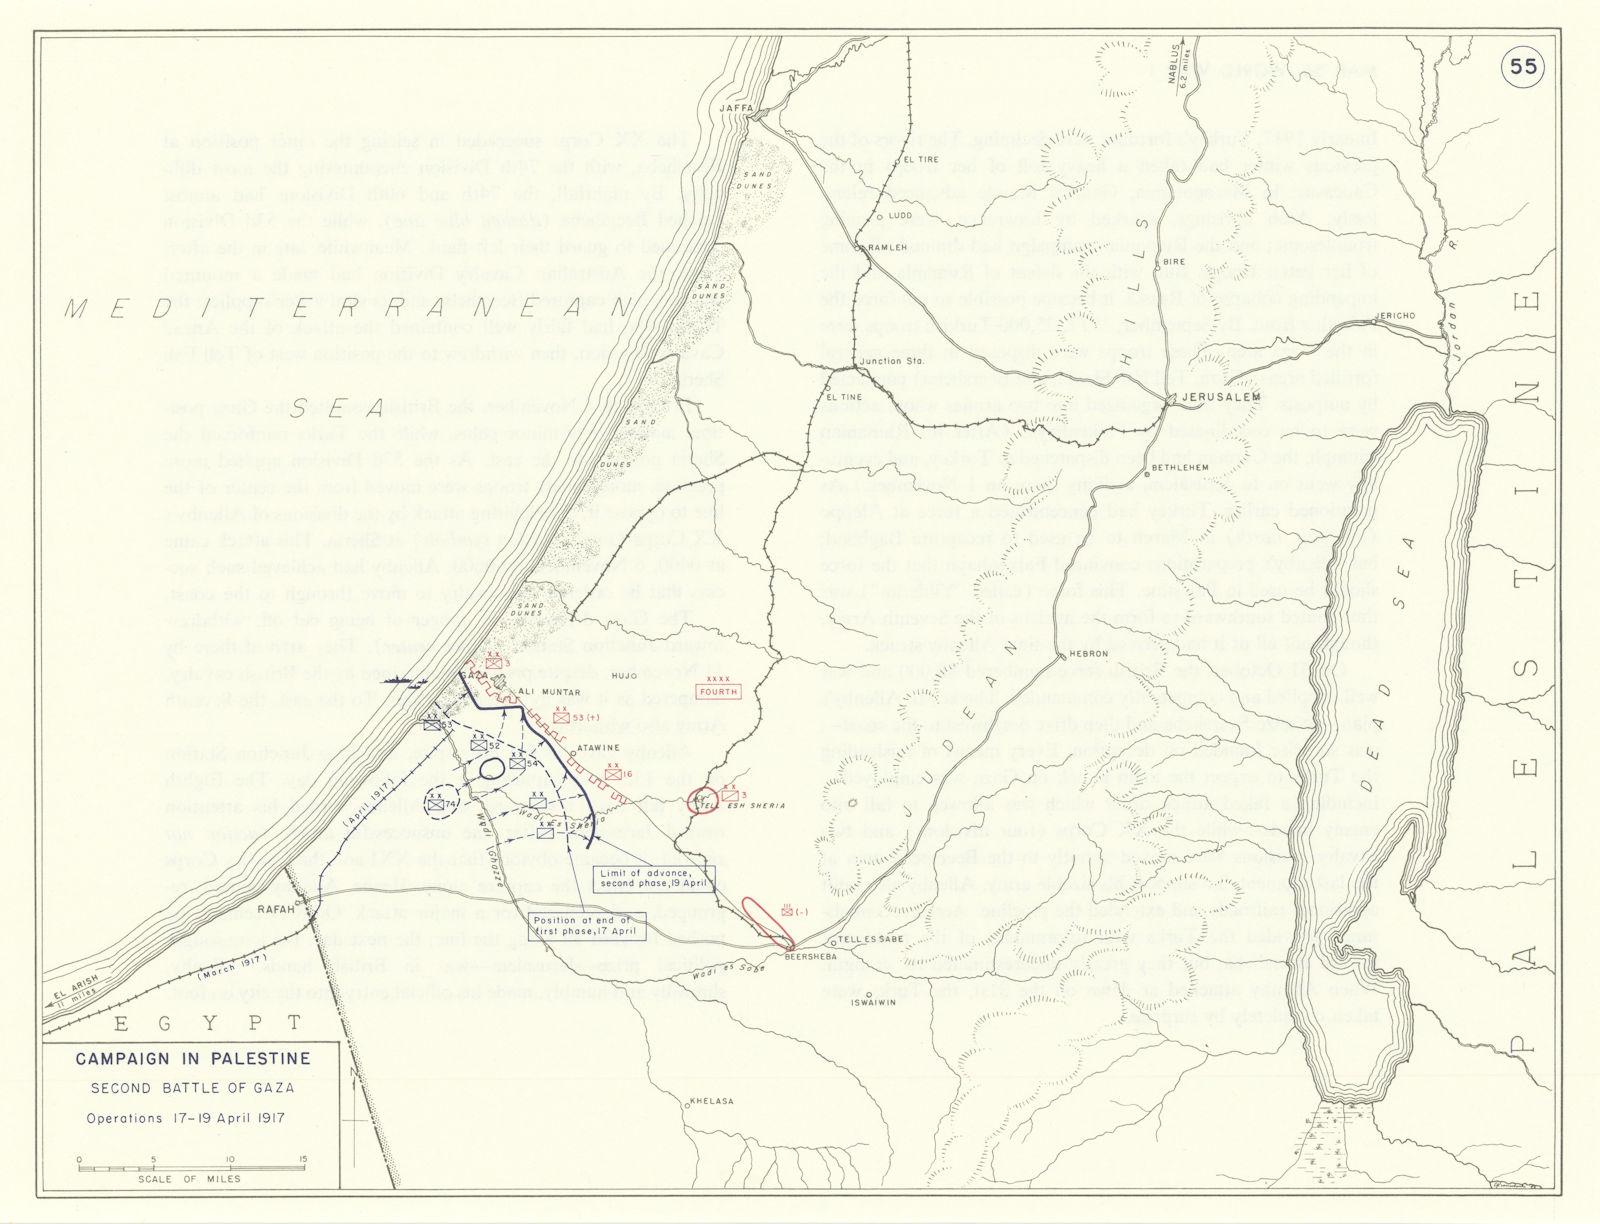 World War 1 Palestine Campaign. April 1917 2nd Battle of Gaza. Israel 1959 map